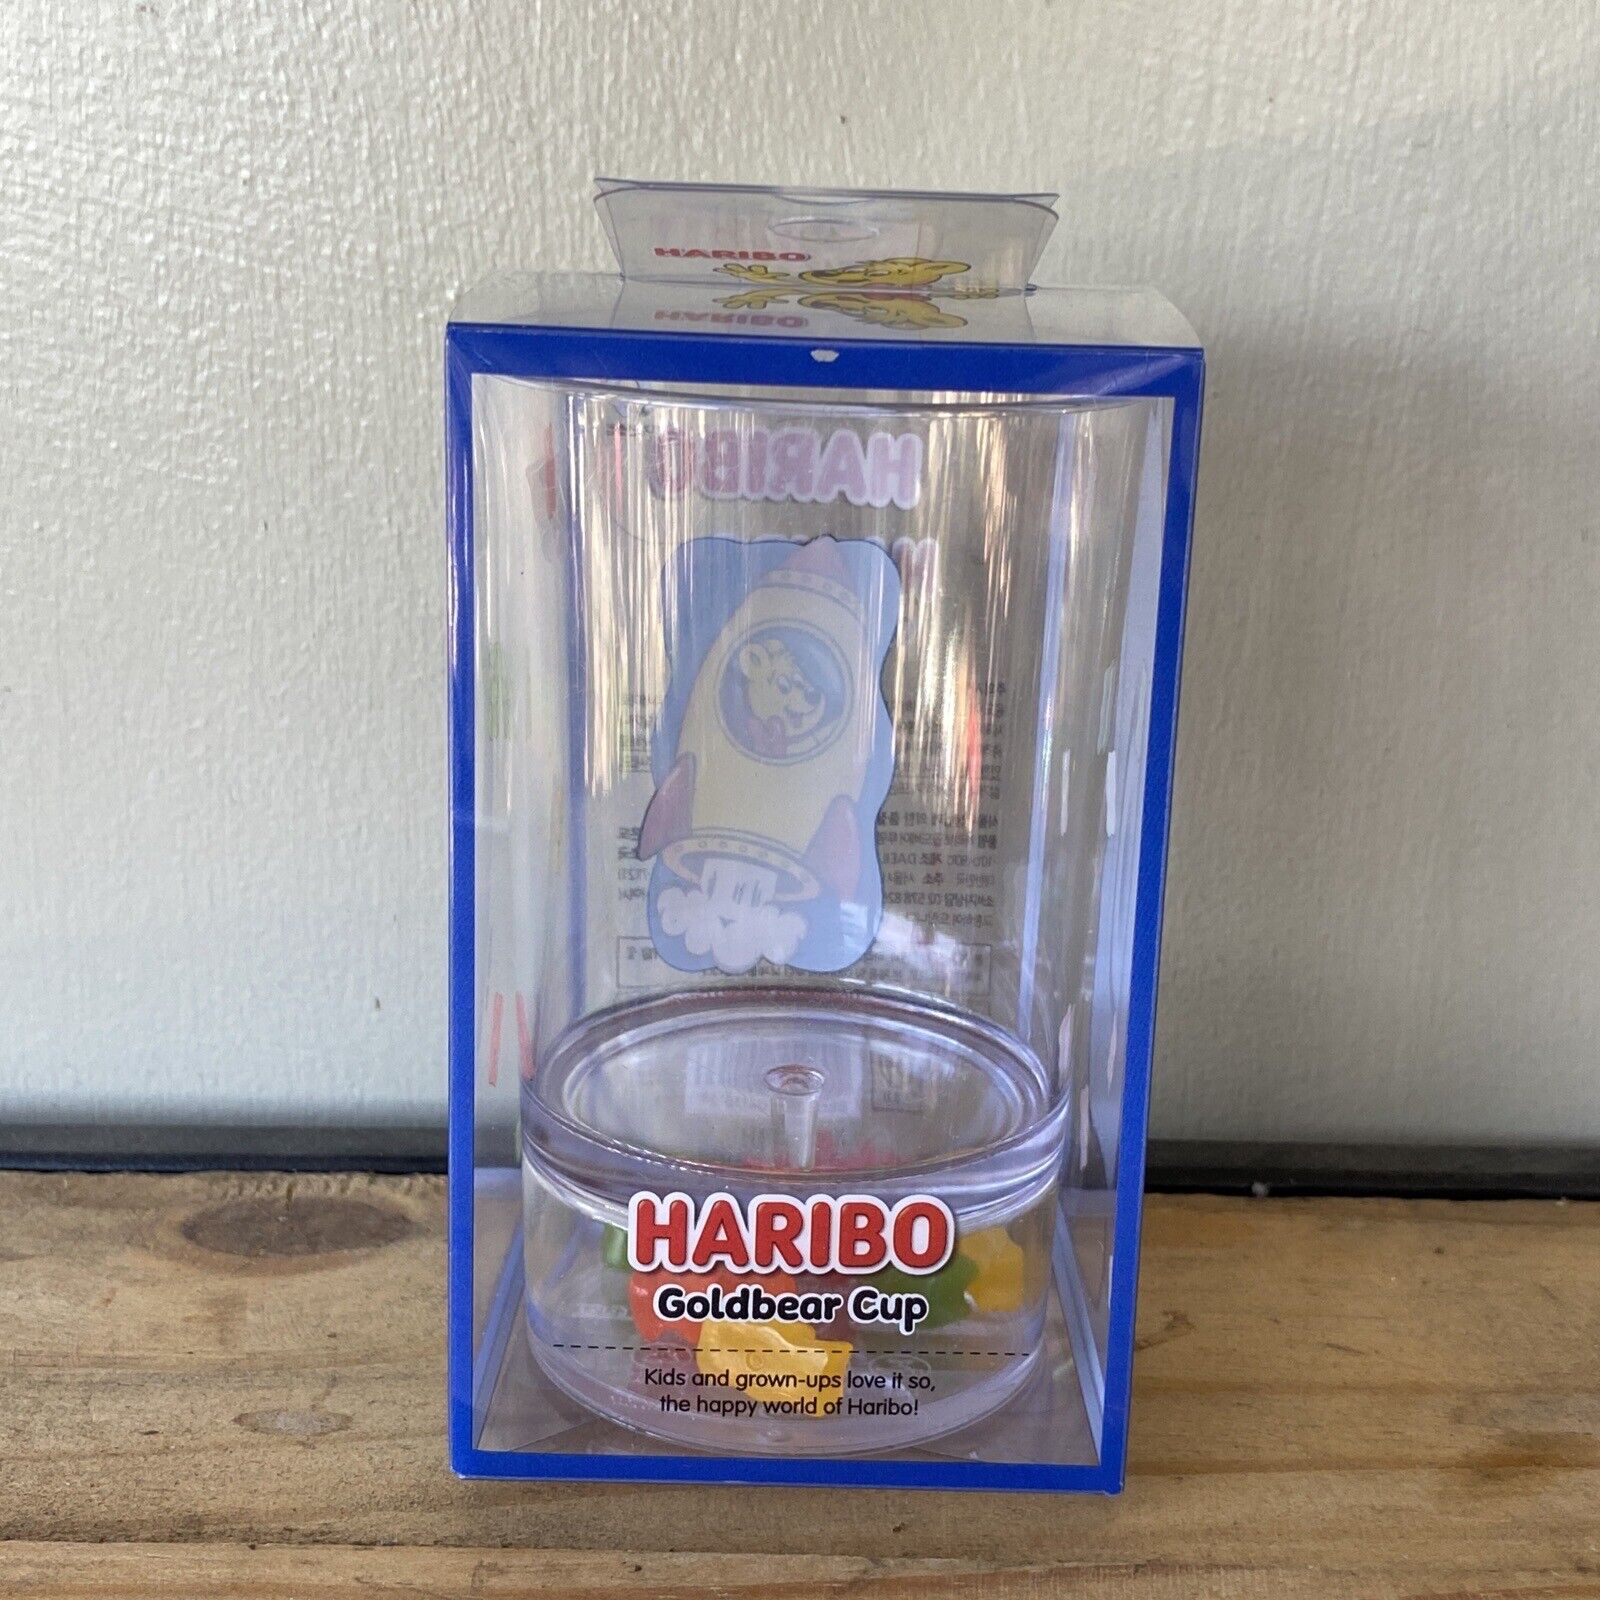 Haribo Goldbear Cup Clear Plastic Cup Gummy Bears in the Bottom - 6.8 oz